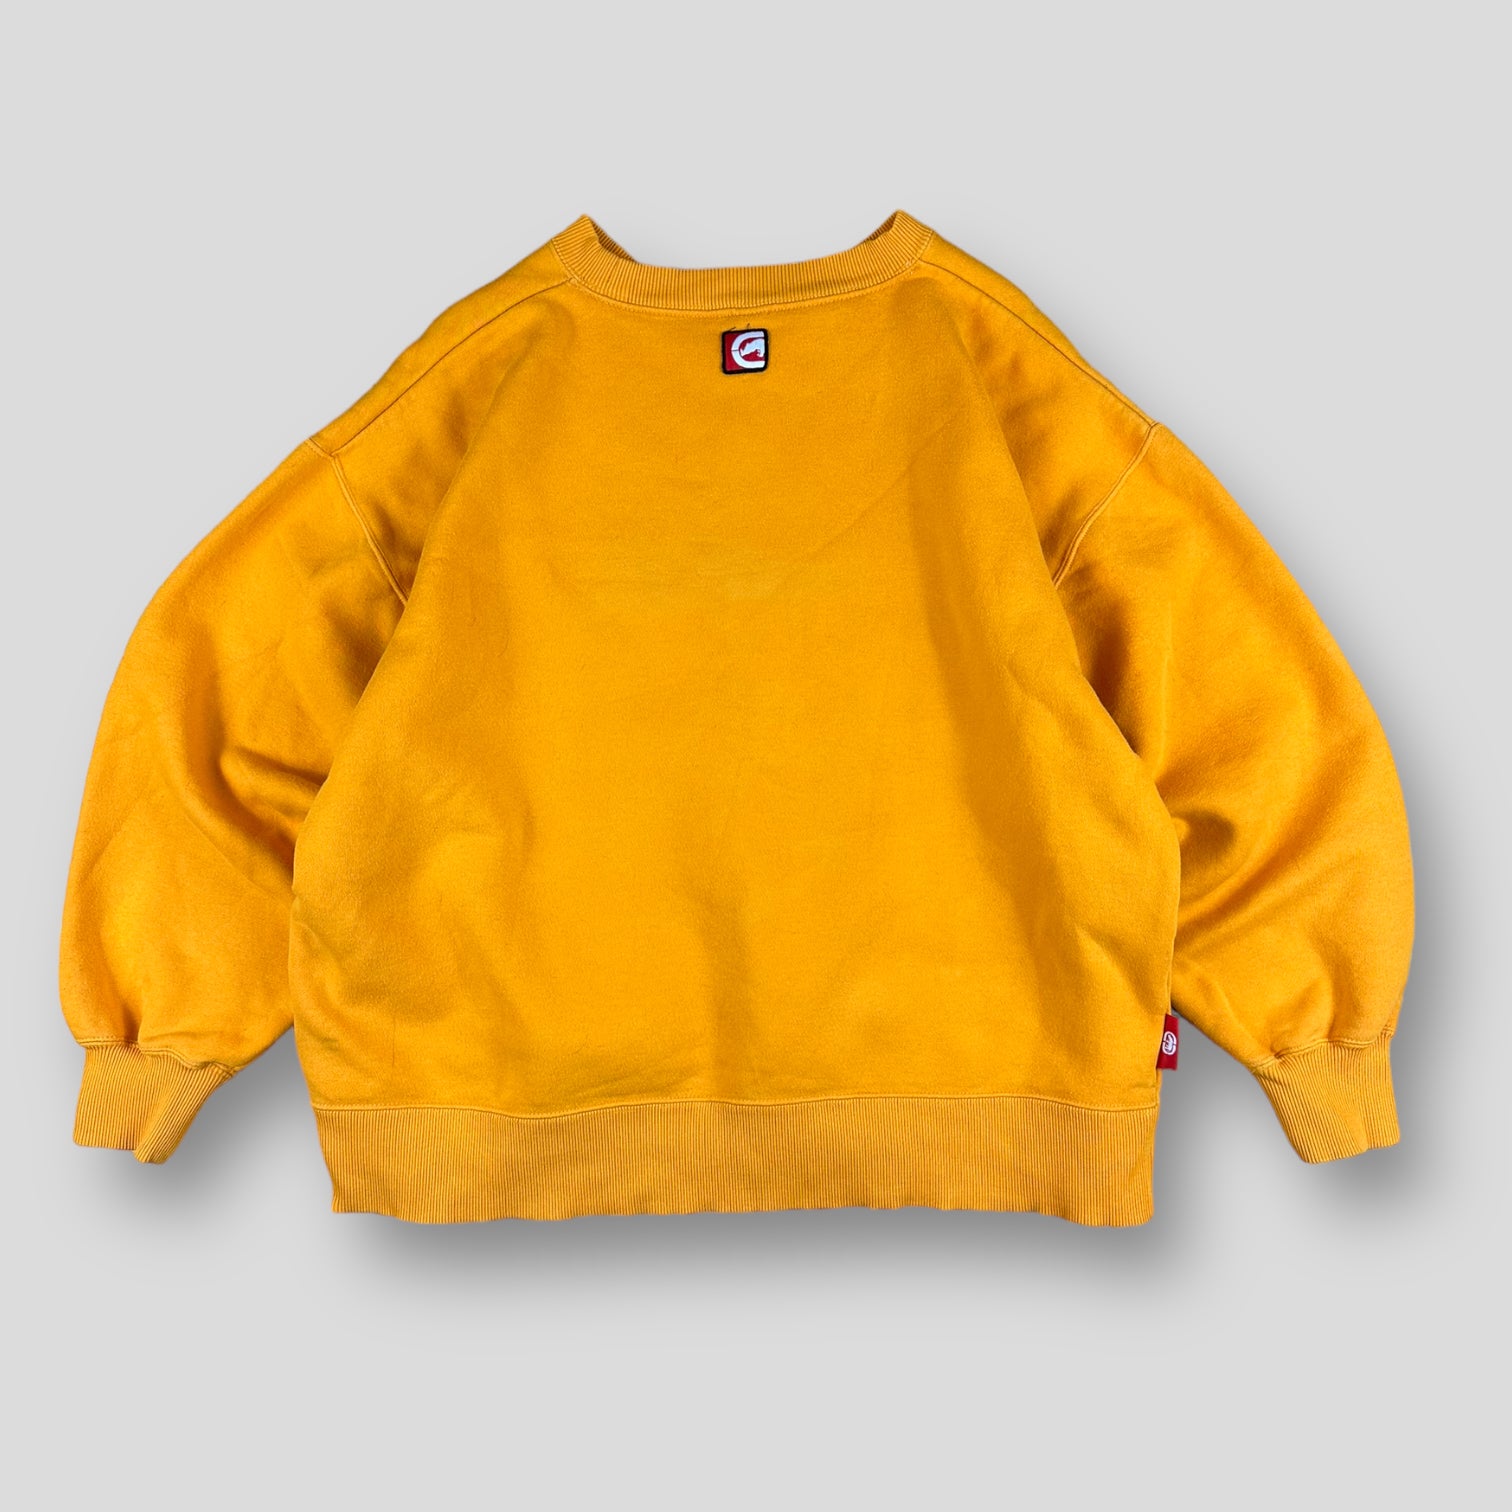 Ecko sweater